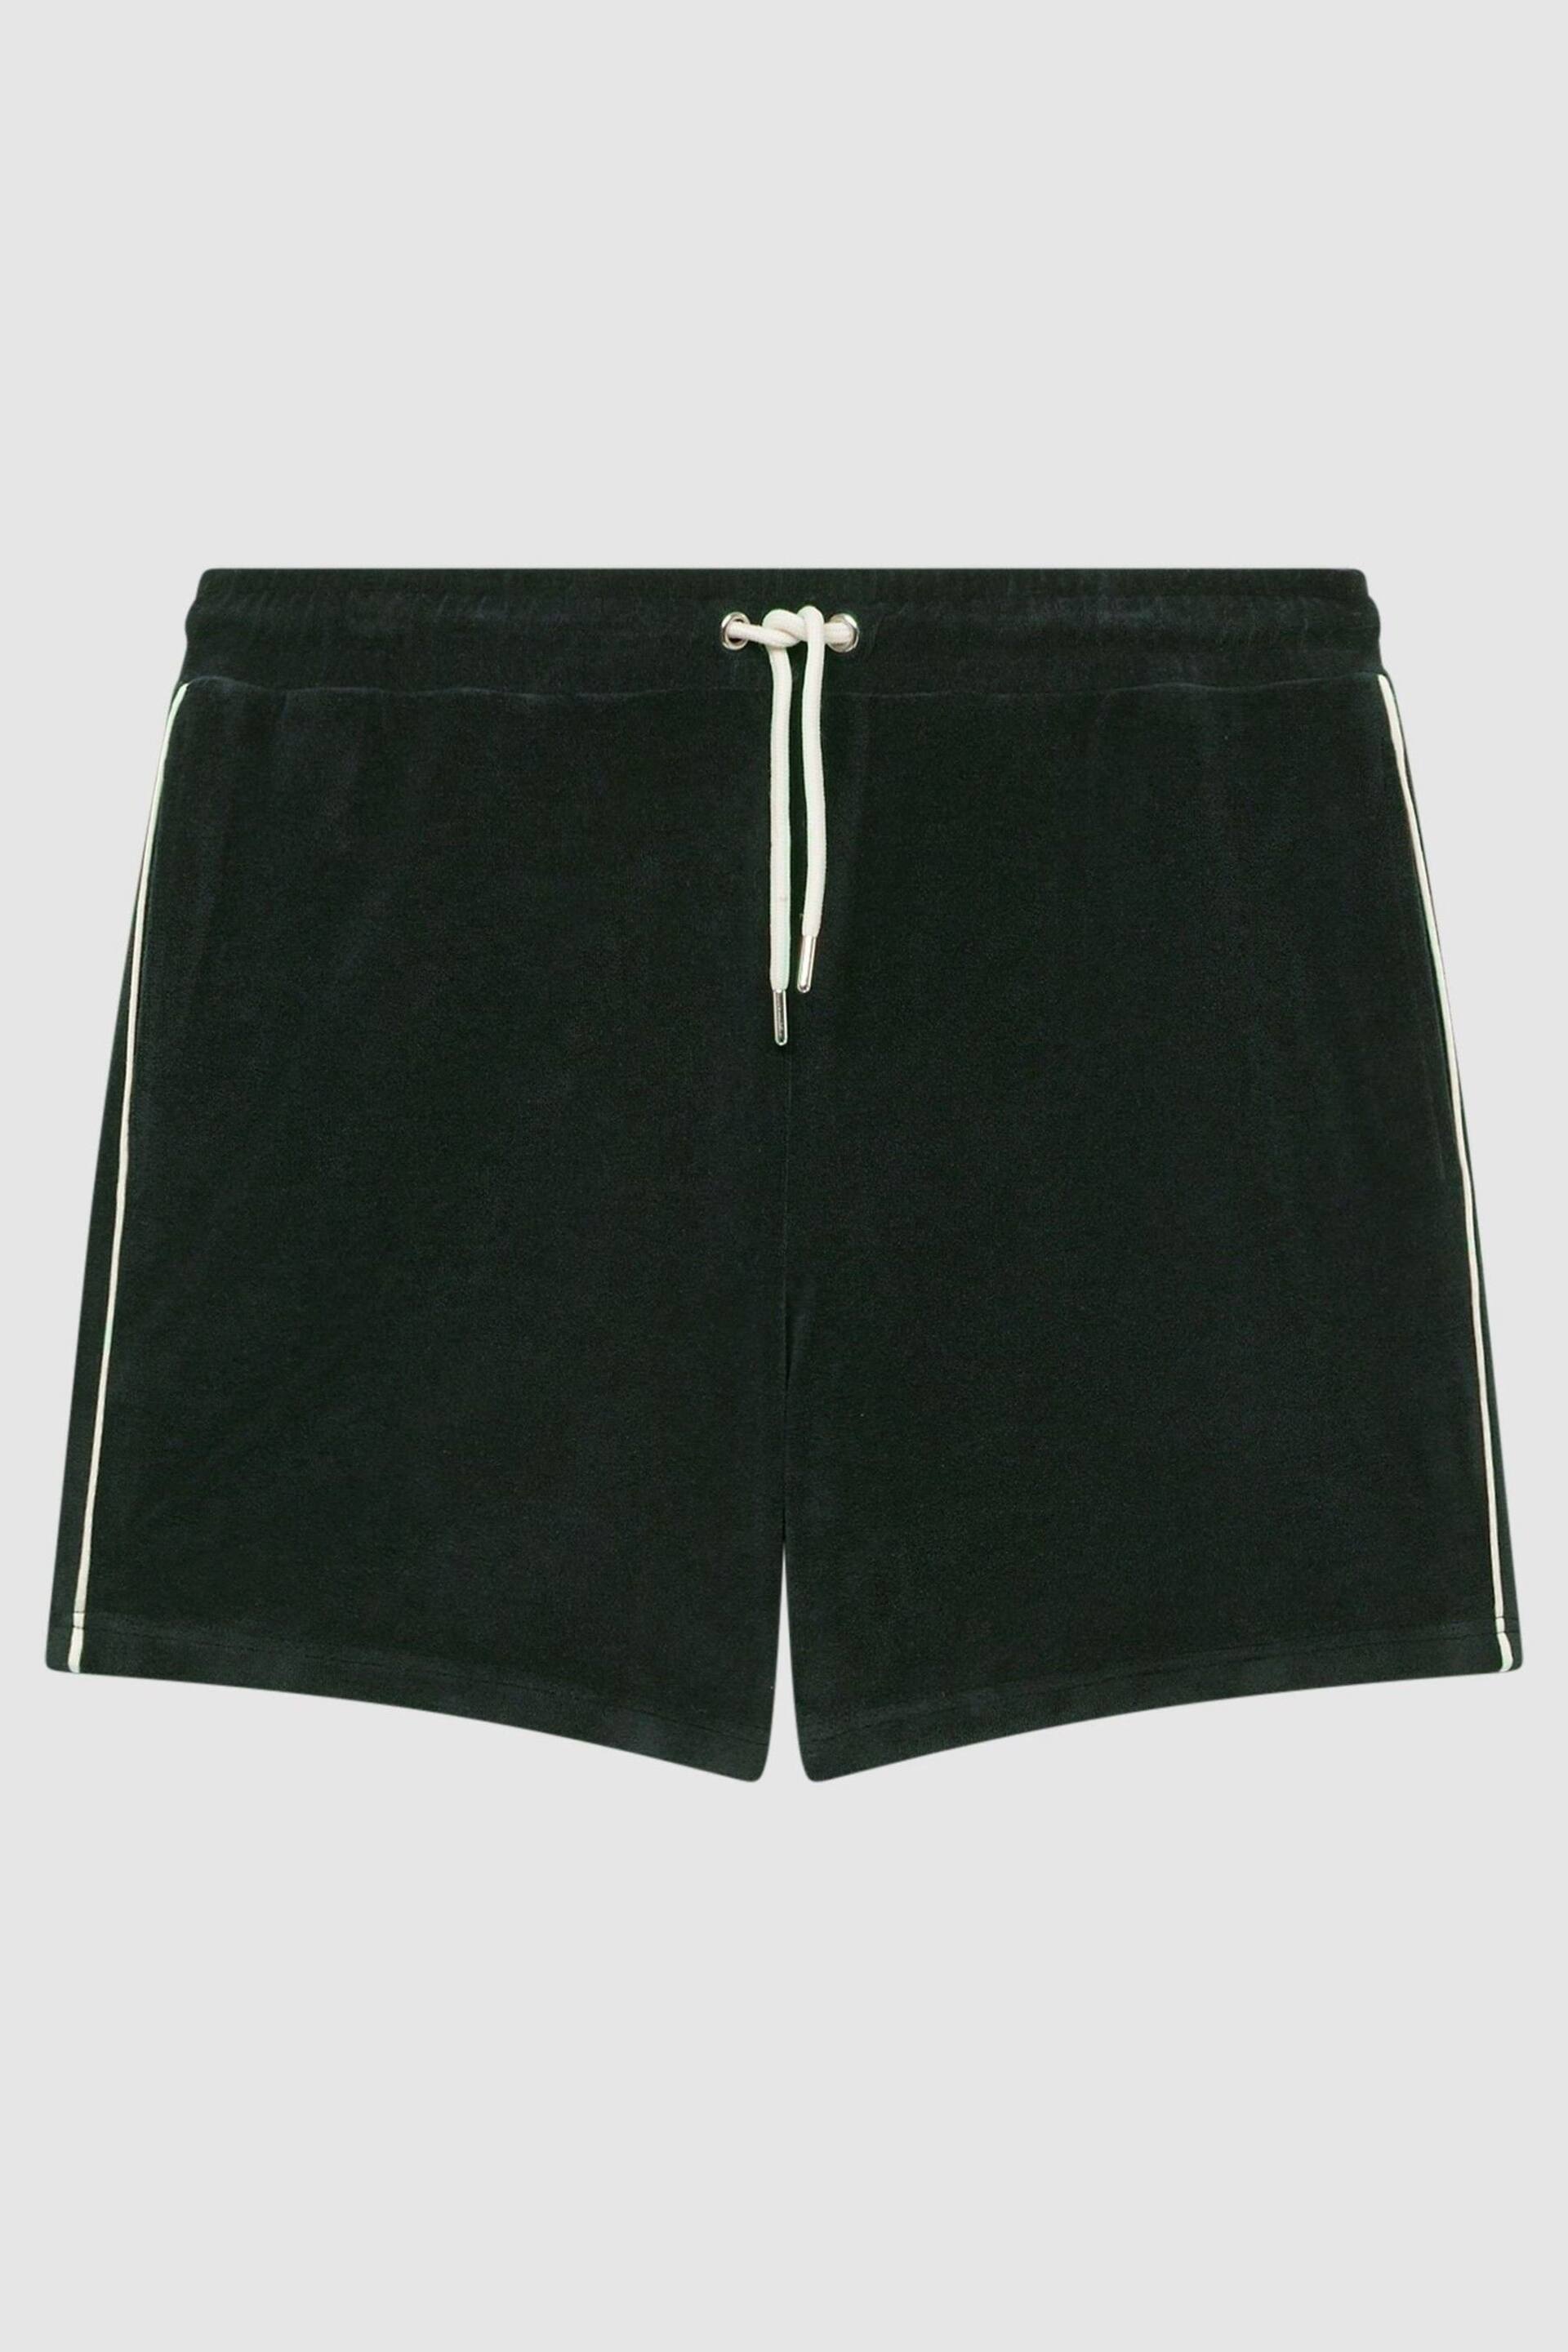 Reiss Dark Green Fredericks Towelling Drawstring Shorts - Image 2 of 4